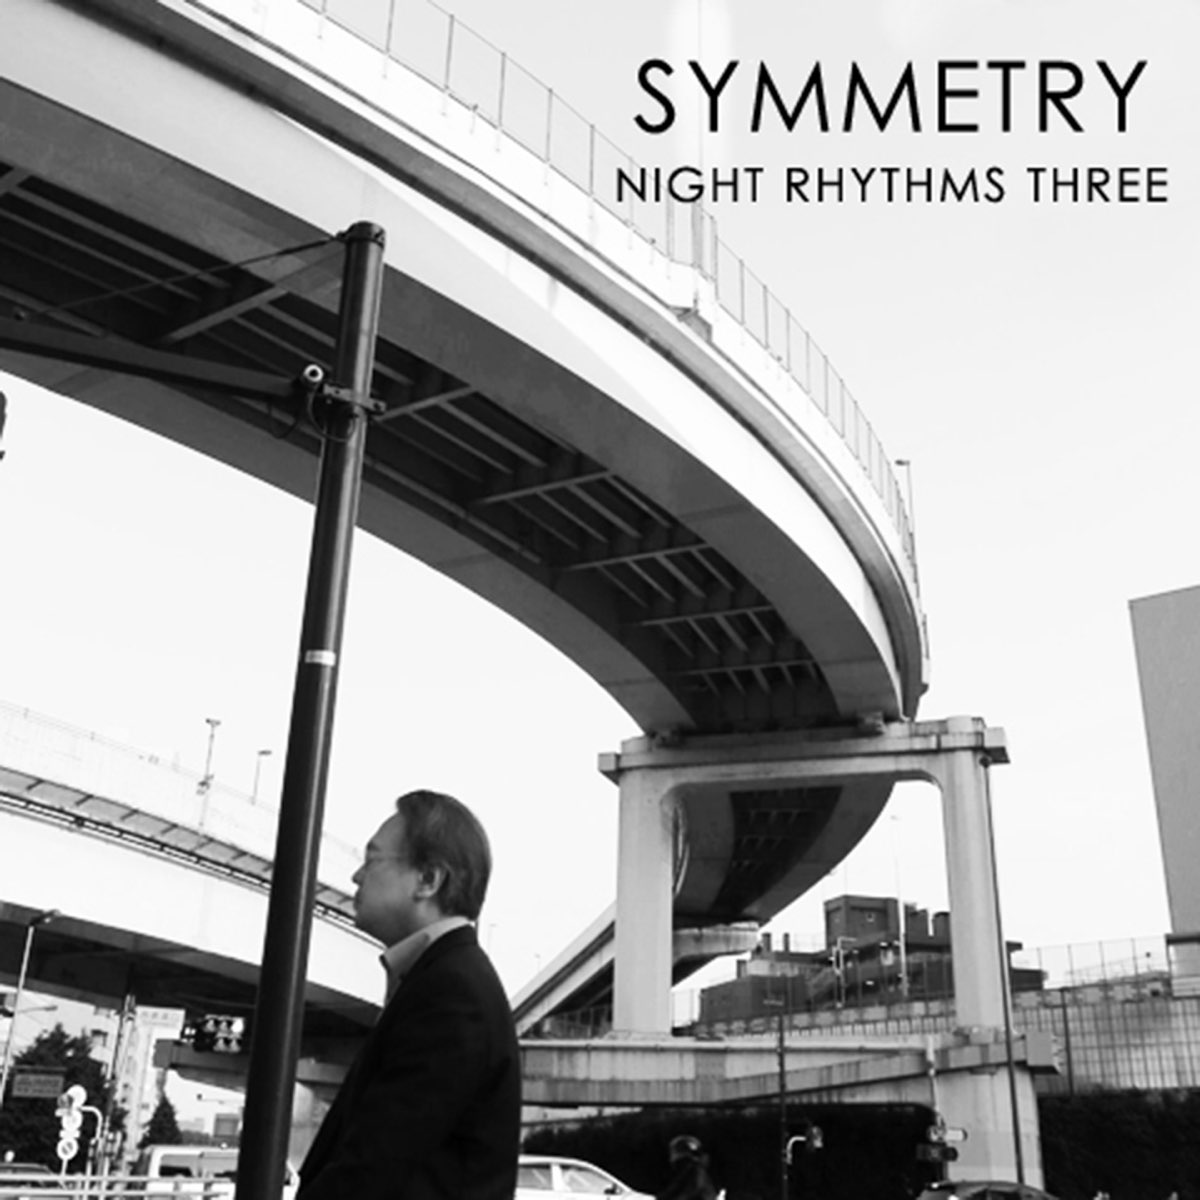 Night rhythm original mix. Night Symmetry. Yotto, something good - Rhythm (of the Night).